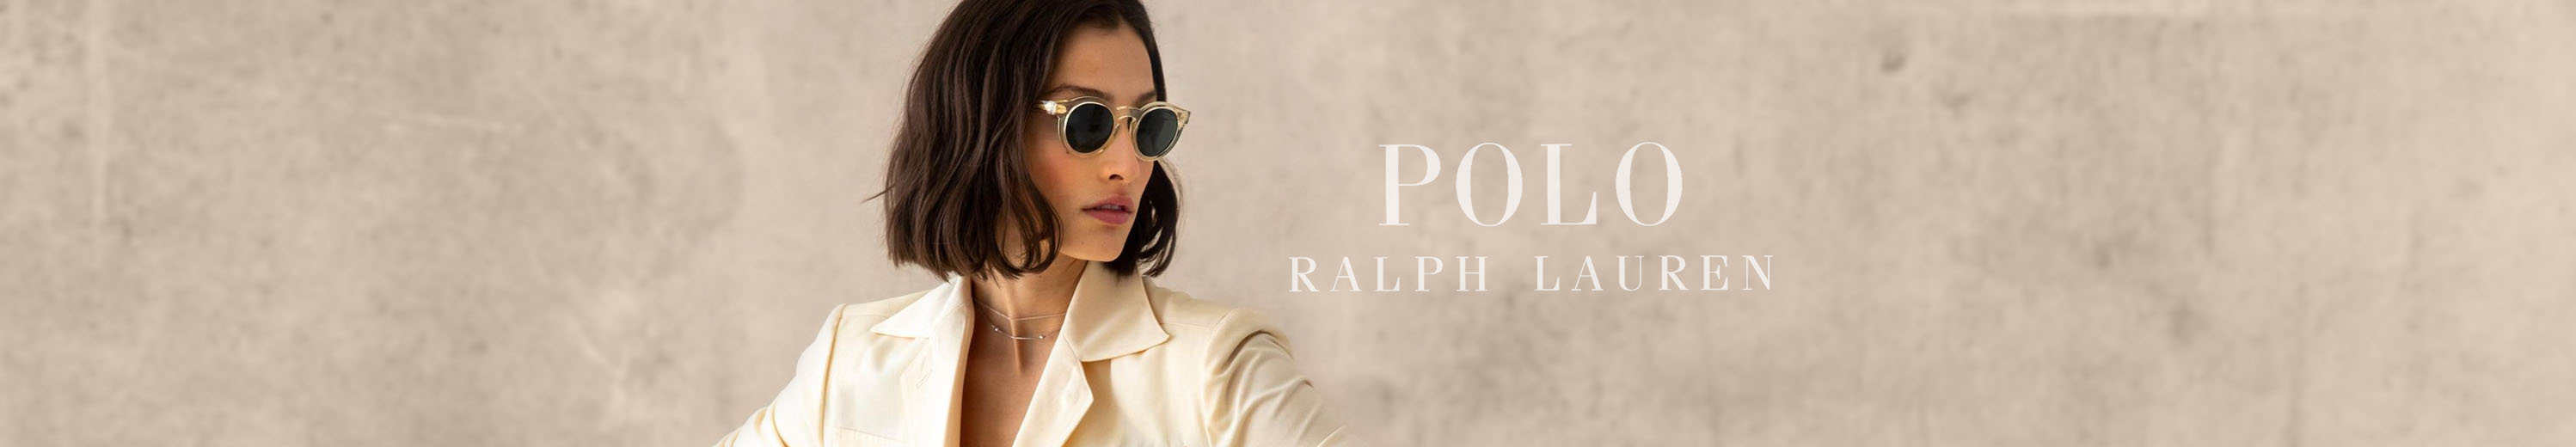 Polo Sunglasses for Women